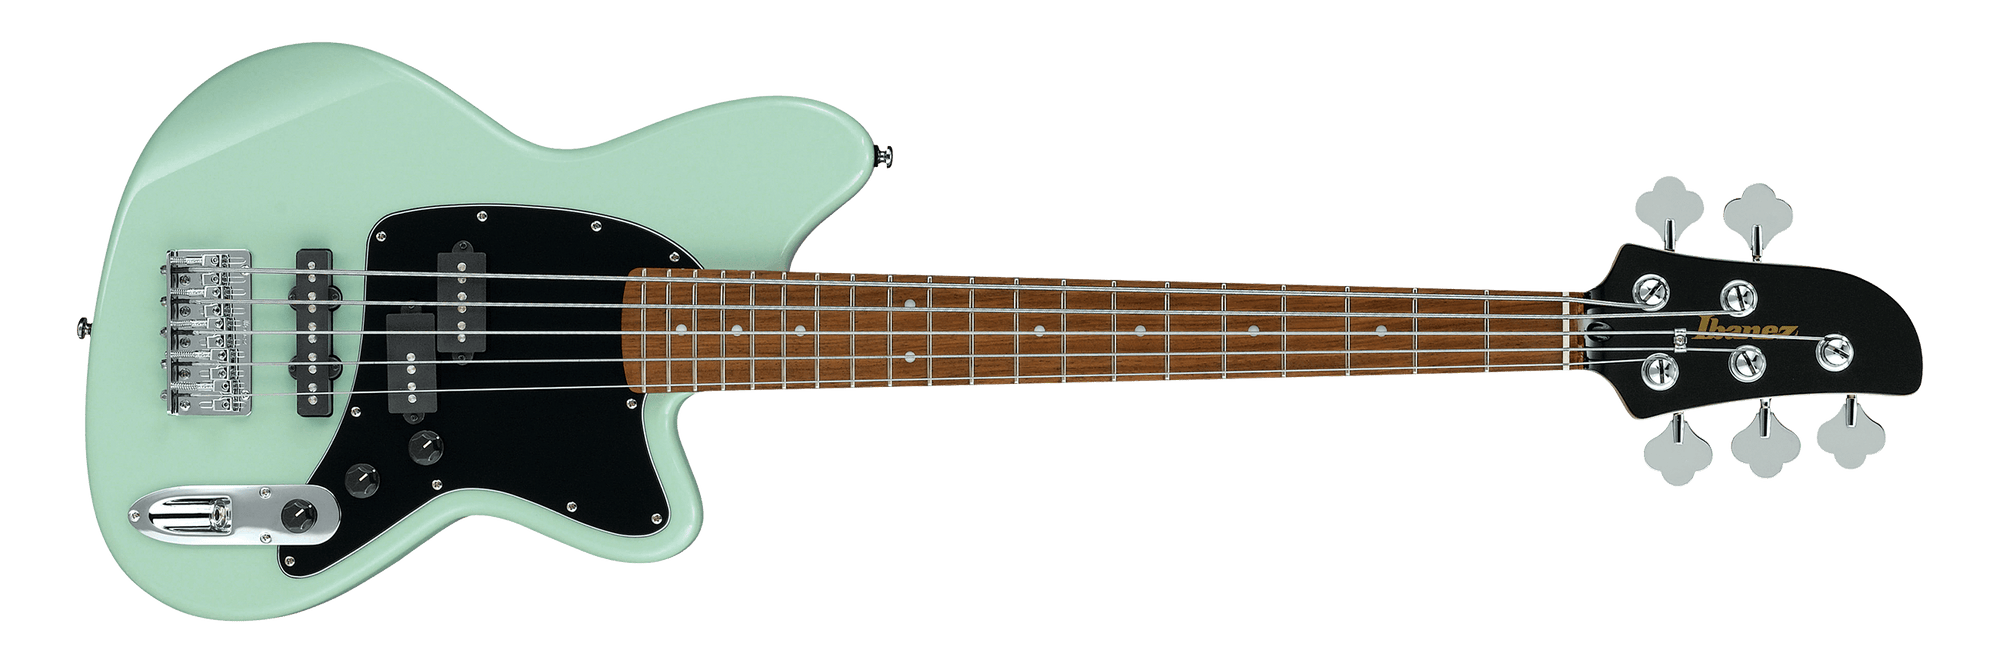 Ibanez TMB35MGR 5 String Bass - Mint Green